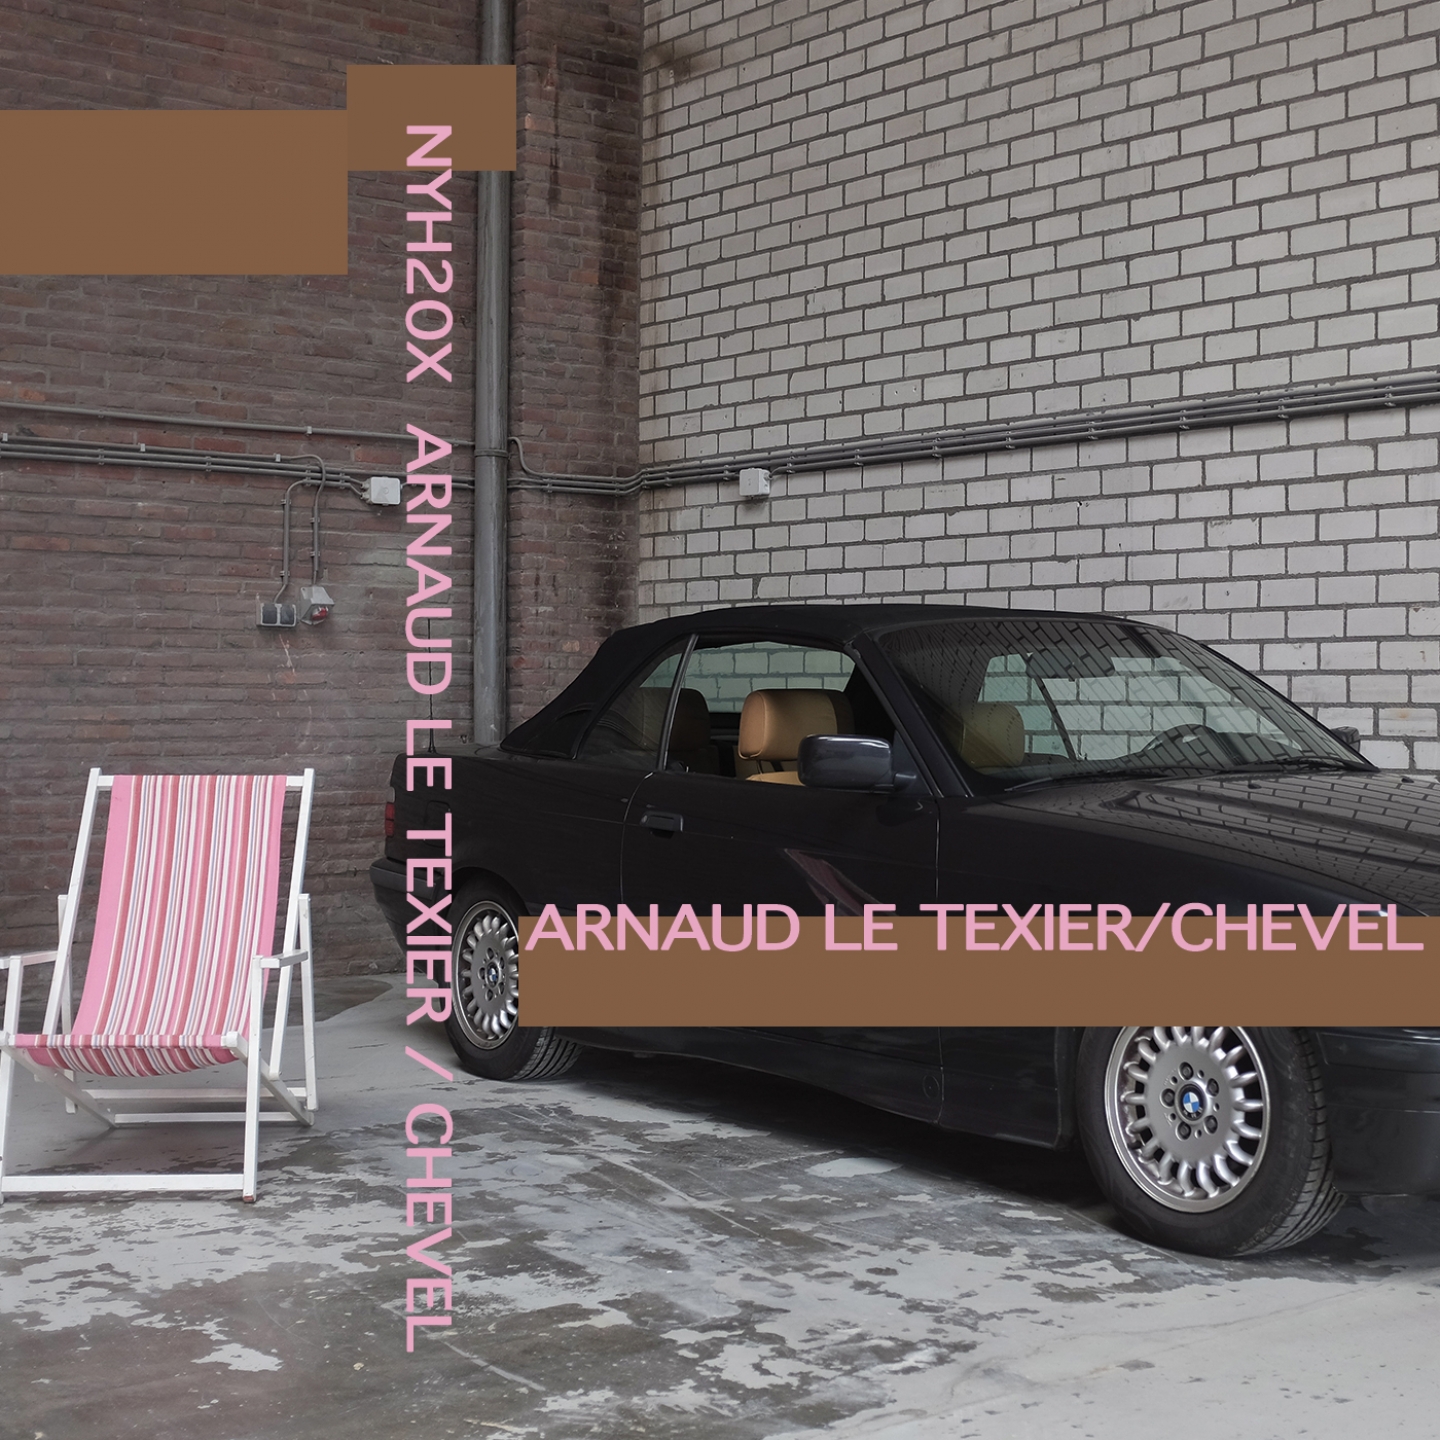 Arnaud Le Texier / Chevel